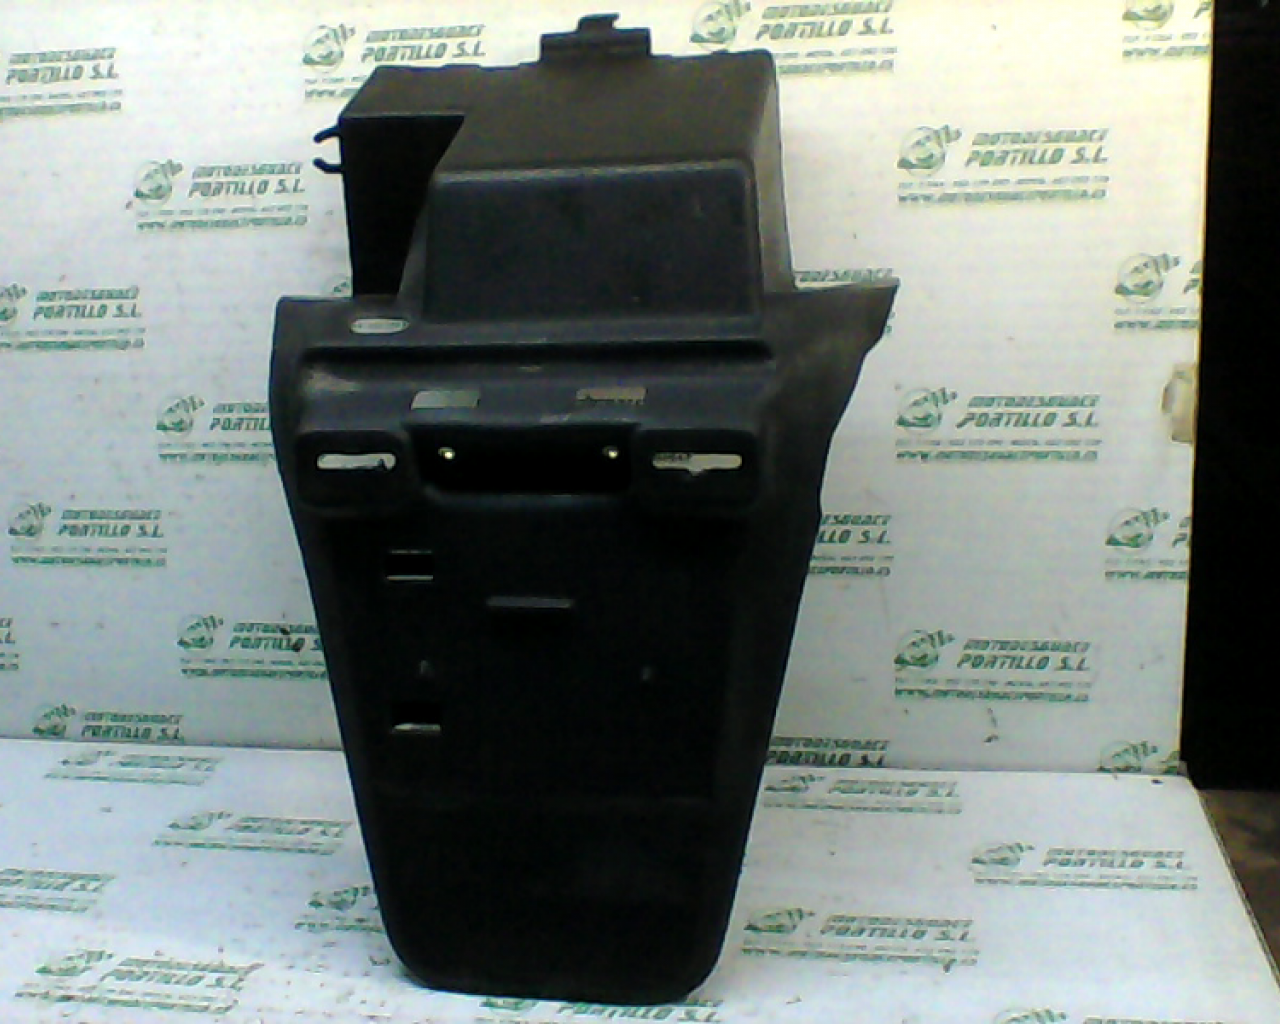 Portamatricula Yamaha FLAME 125R 97-00 (1997-2000)